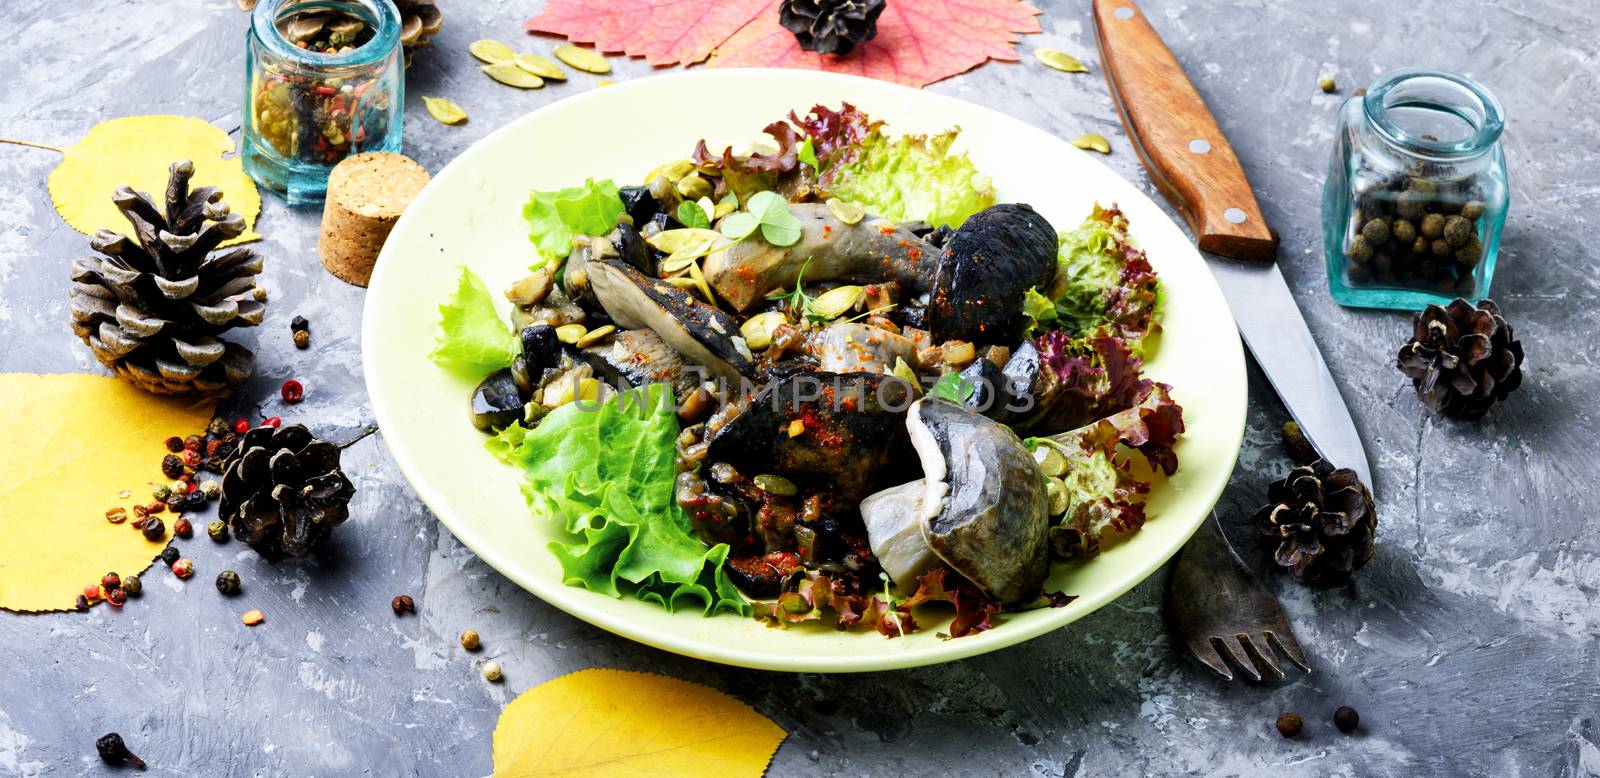 Vegetarian salad with mushrooms by LMykola